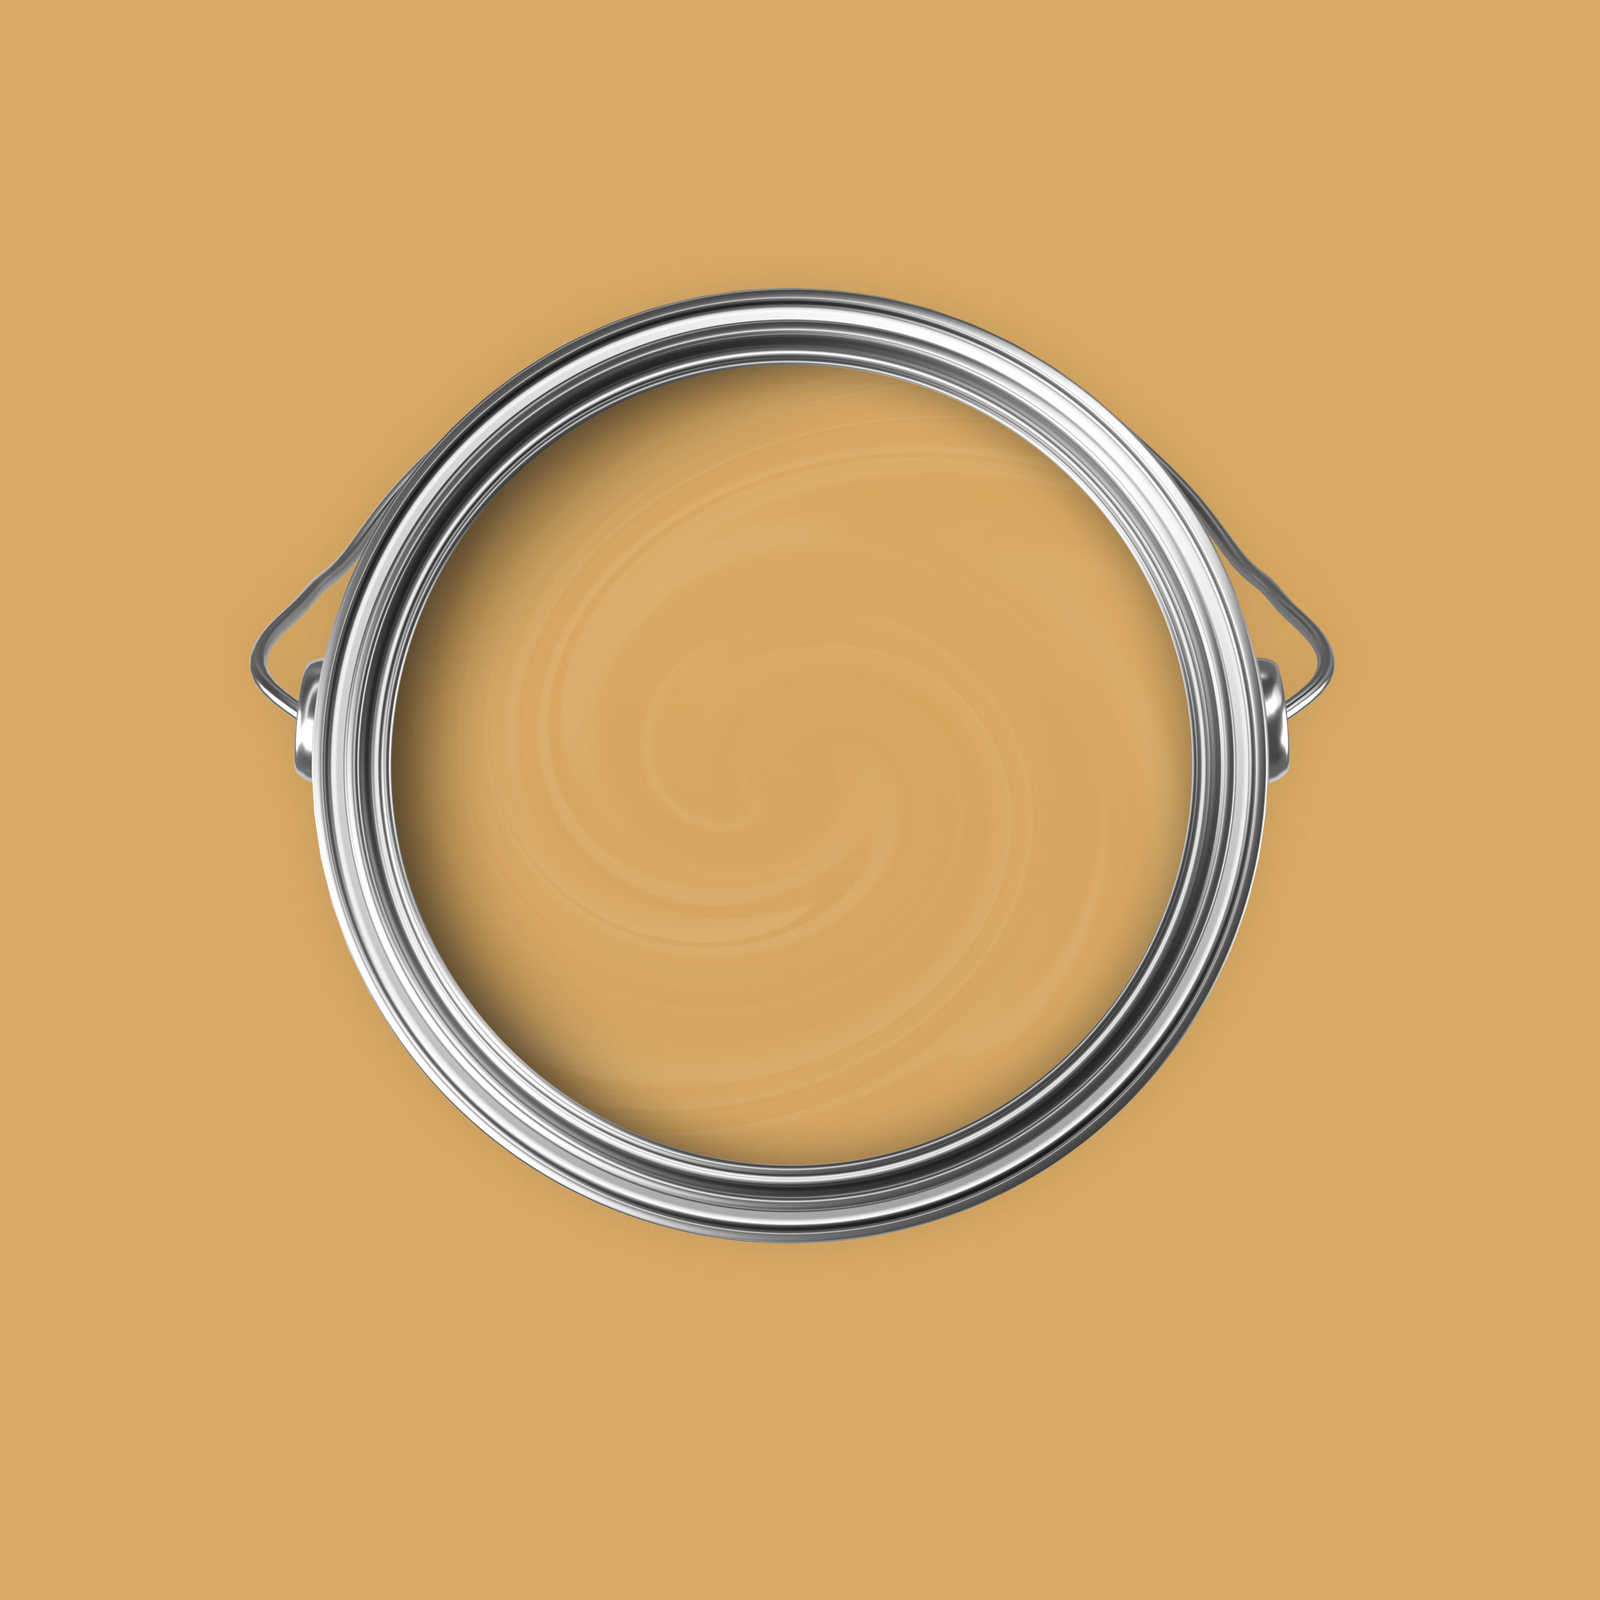             Premium Wall Paint refreshing mustard yellow »Beige Orange/Sassy Saffron« NW812 – 5 litre
        